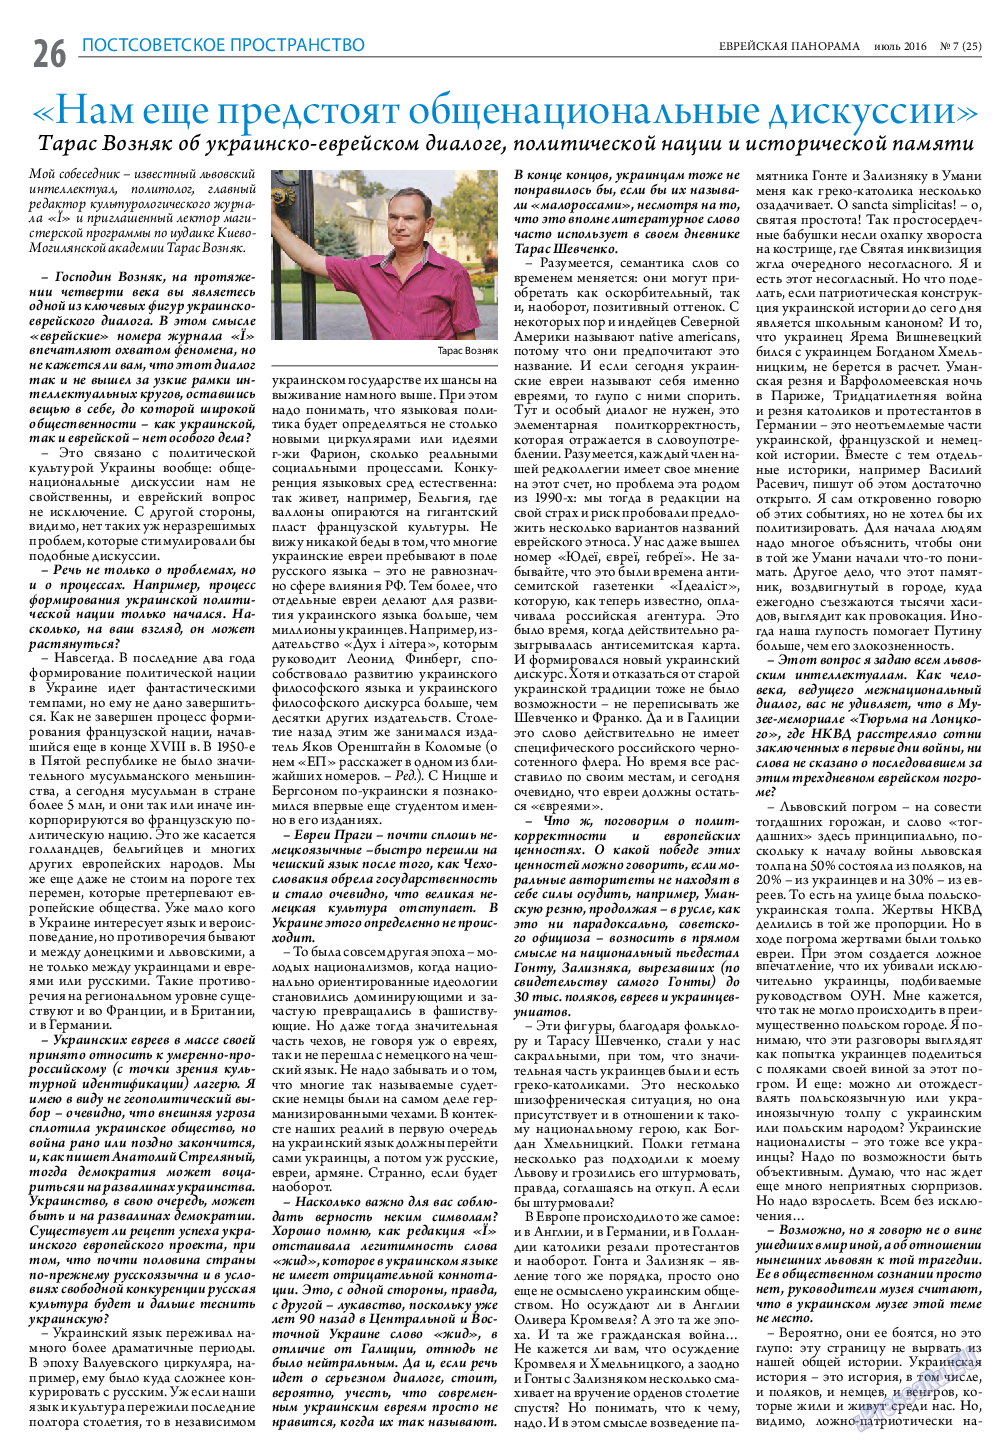 Еврейская панорама, газета. 2016 №7 стр.26